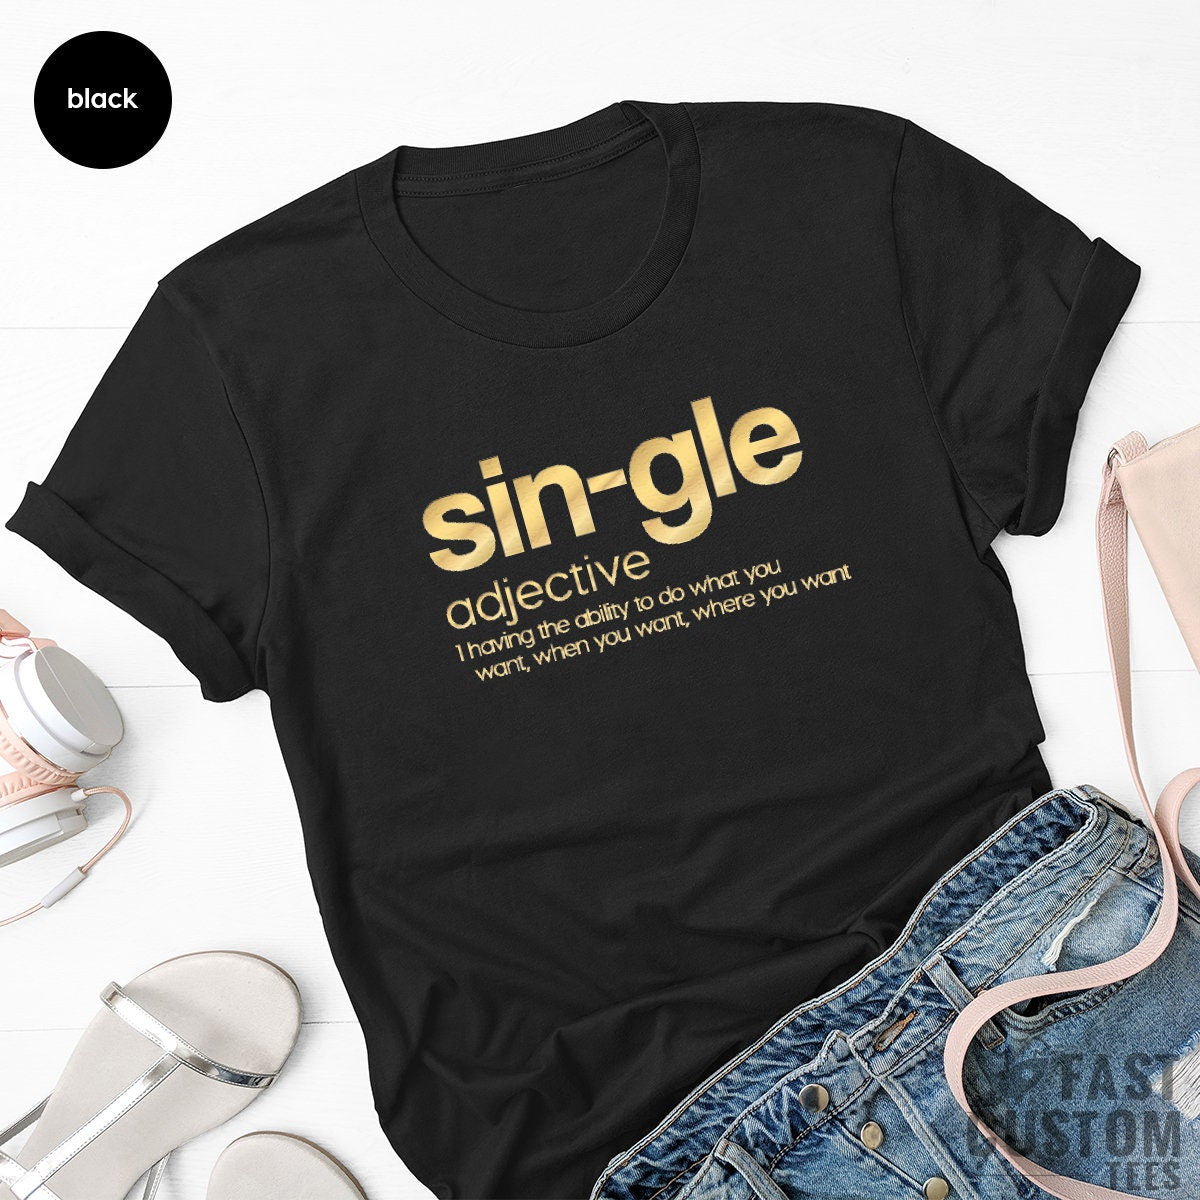 Single Valentine Shirt, Sin-gle Adjective Shirt, Funny Valentines Shirt, Anti Valentines Shirt, Shirt For Single Friends, Girls Power Shirt - Fastdeliverytees.com